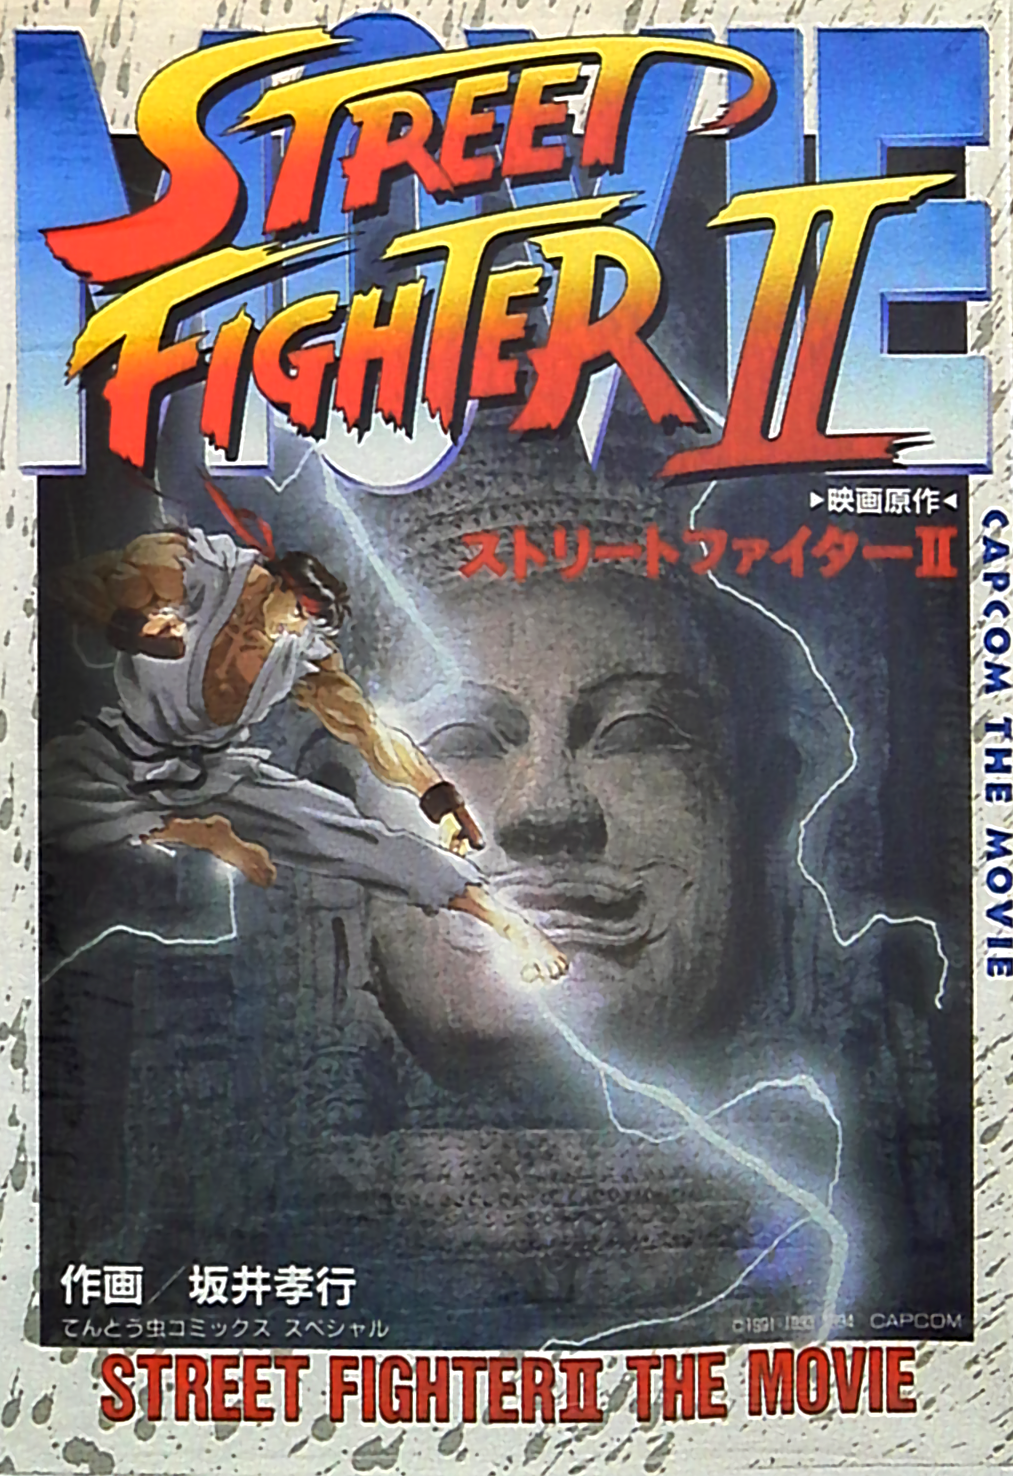 The Street Fighter II Movie